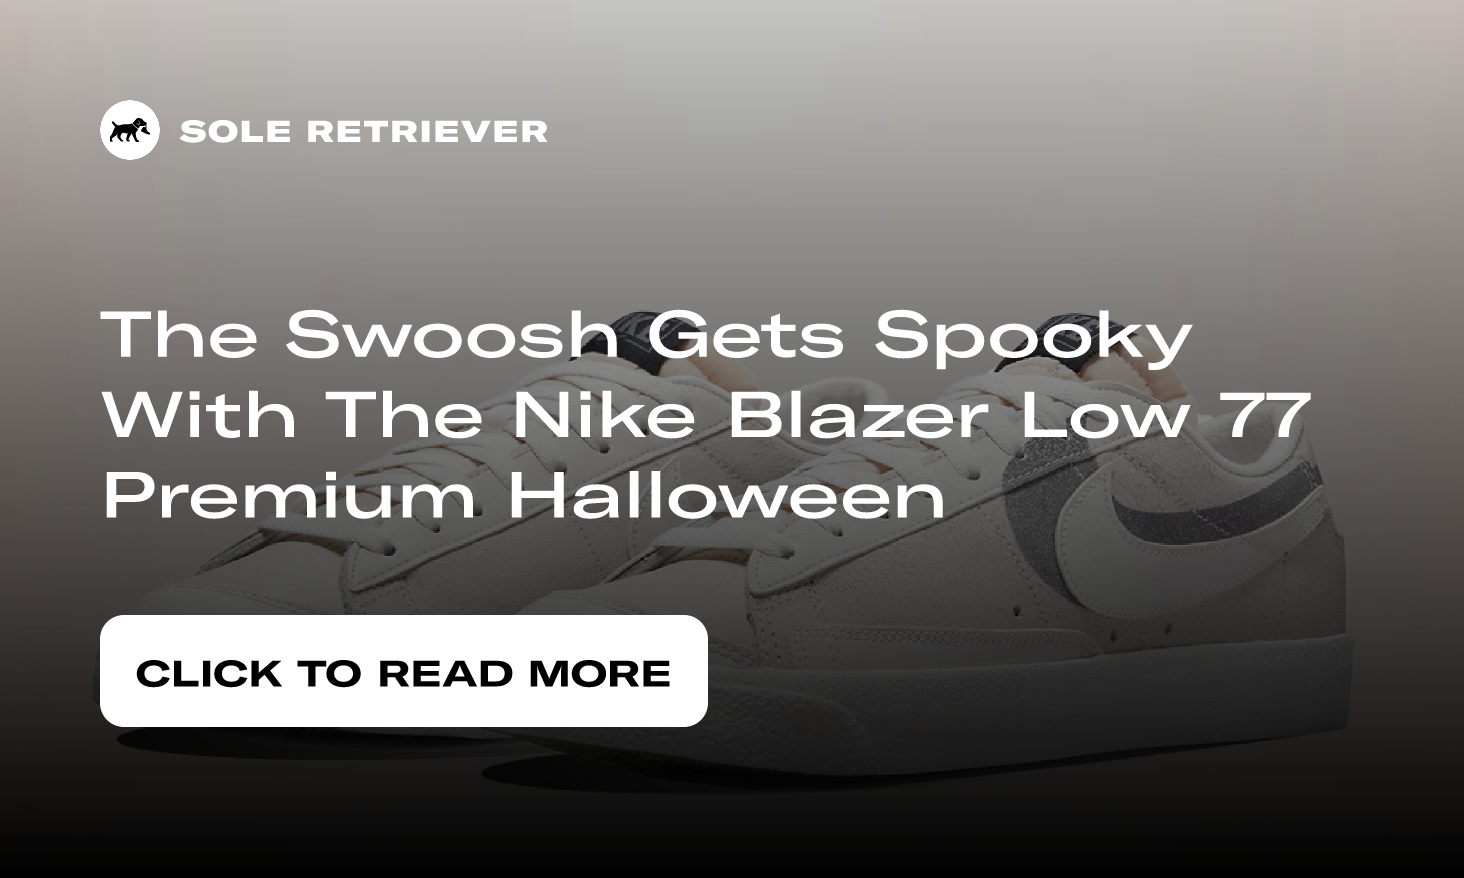 The Swoosh Gets Spooky With The Nike Blazer Low 77 Premium